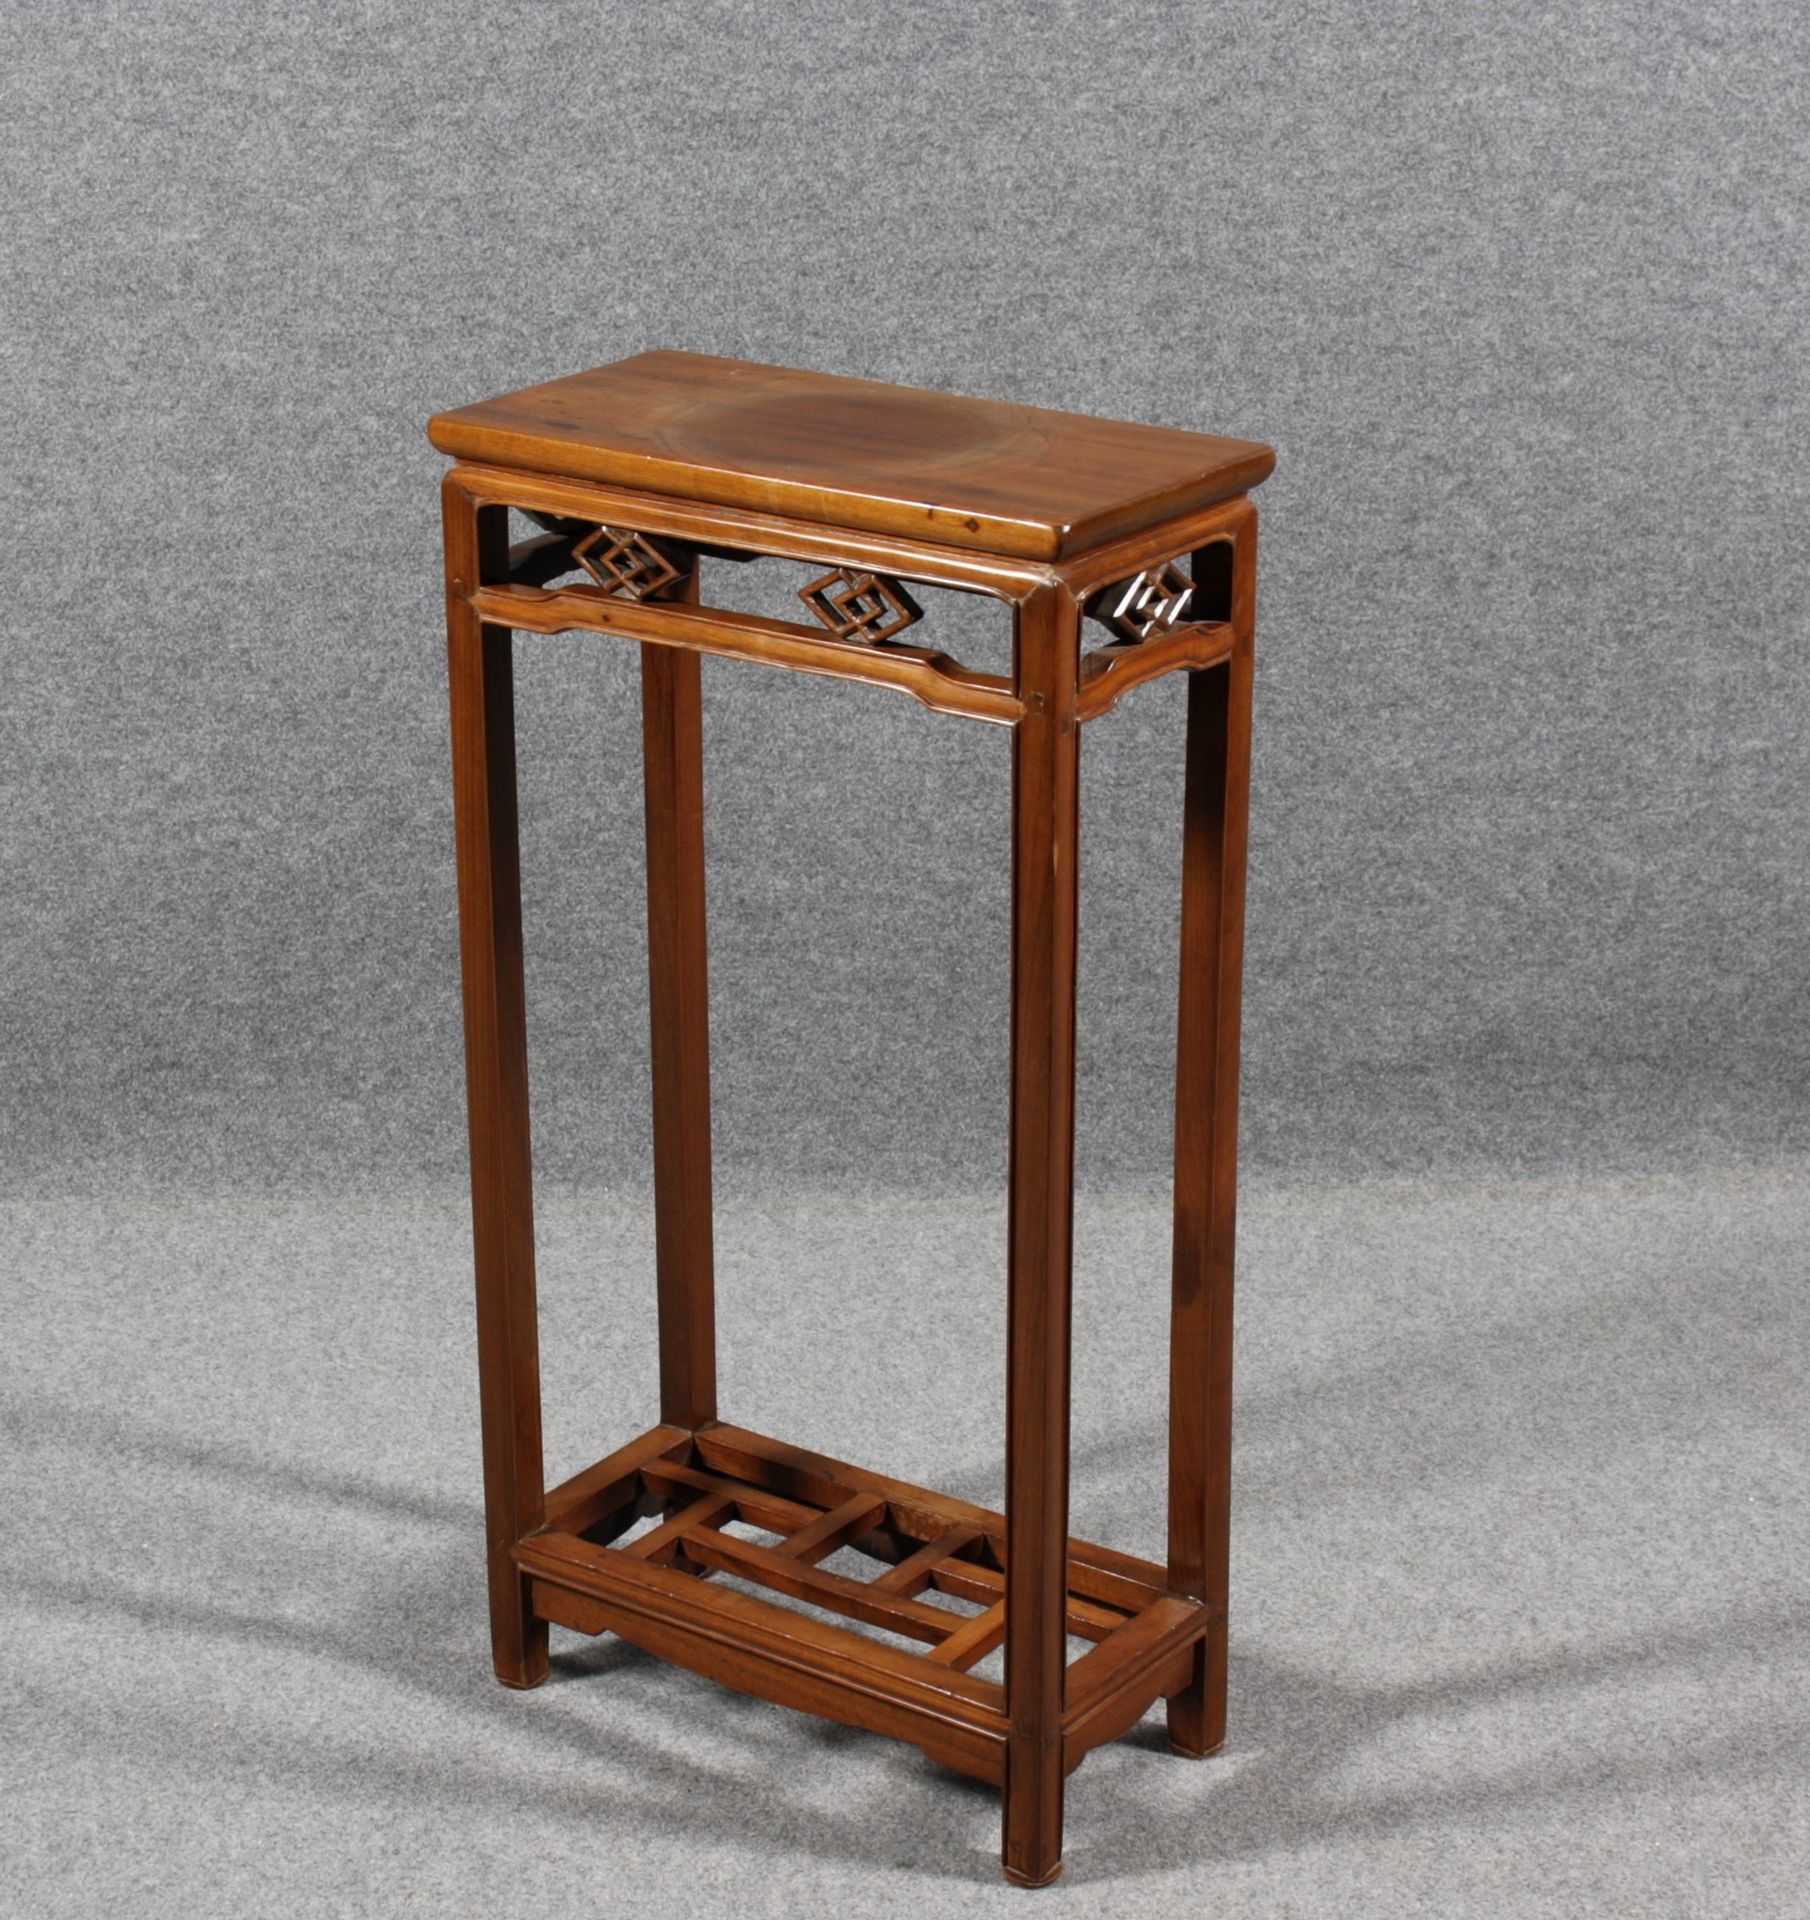 Wooden service table 胡桃木服务台。中国。19世纪晚期。76x41x20厘米左右。